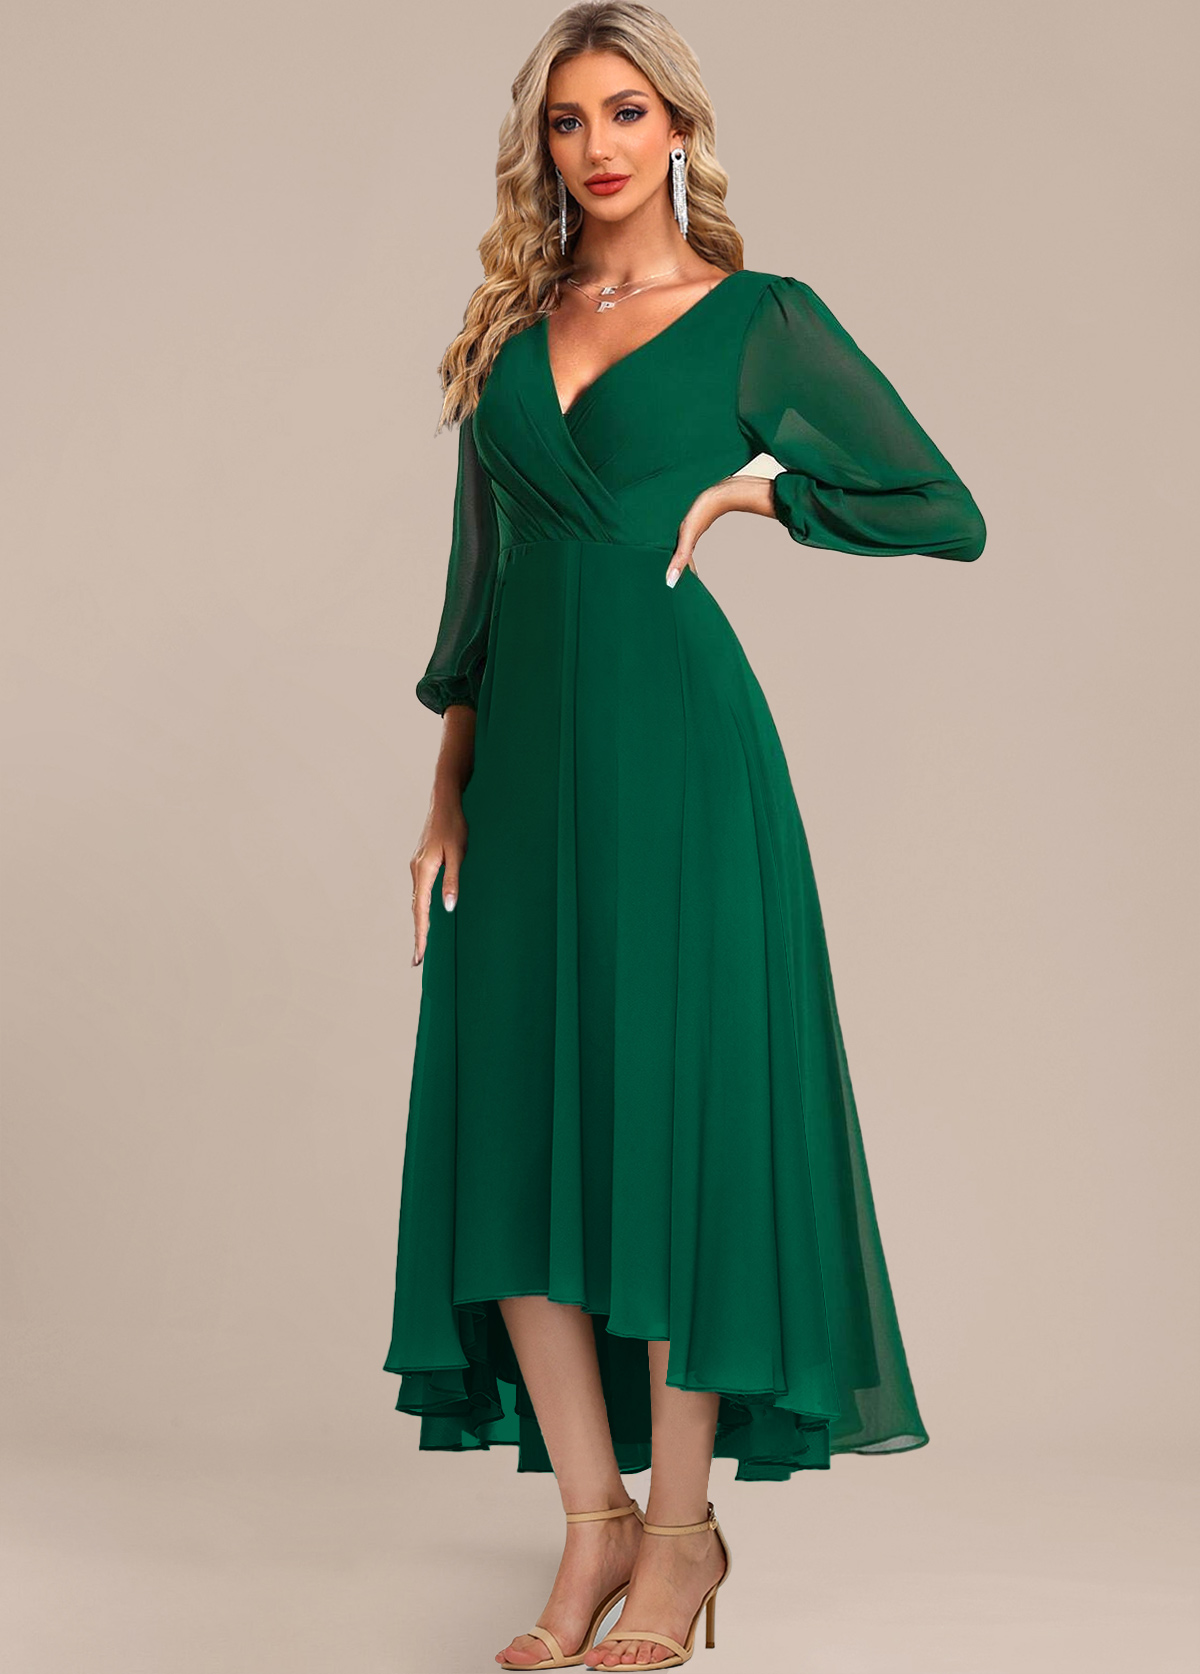 Surplice Green High Low Three Quarter Length Sleeve Dress